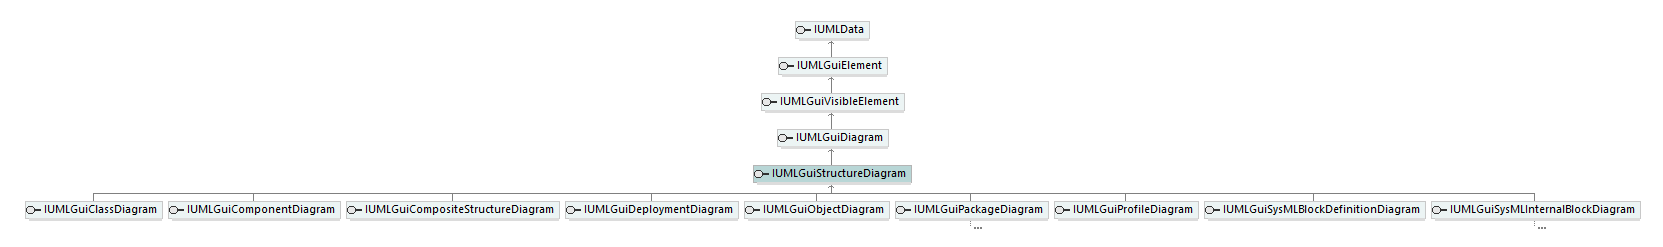 UModelAPI_diagrams/UModelAPI_p346.png